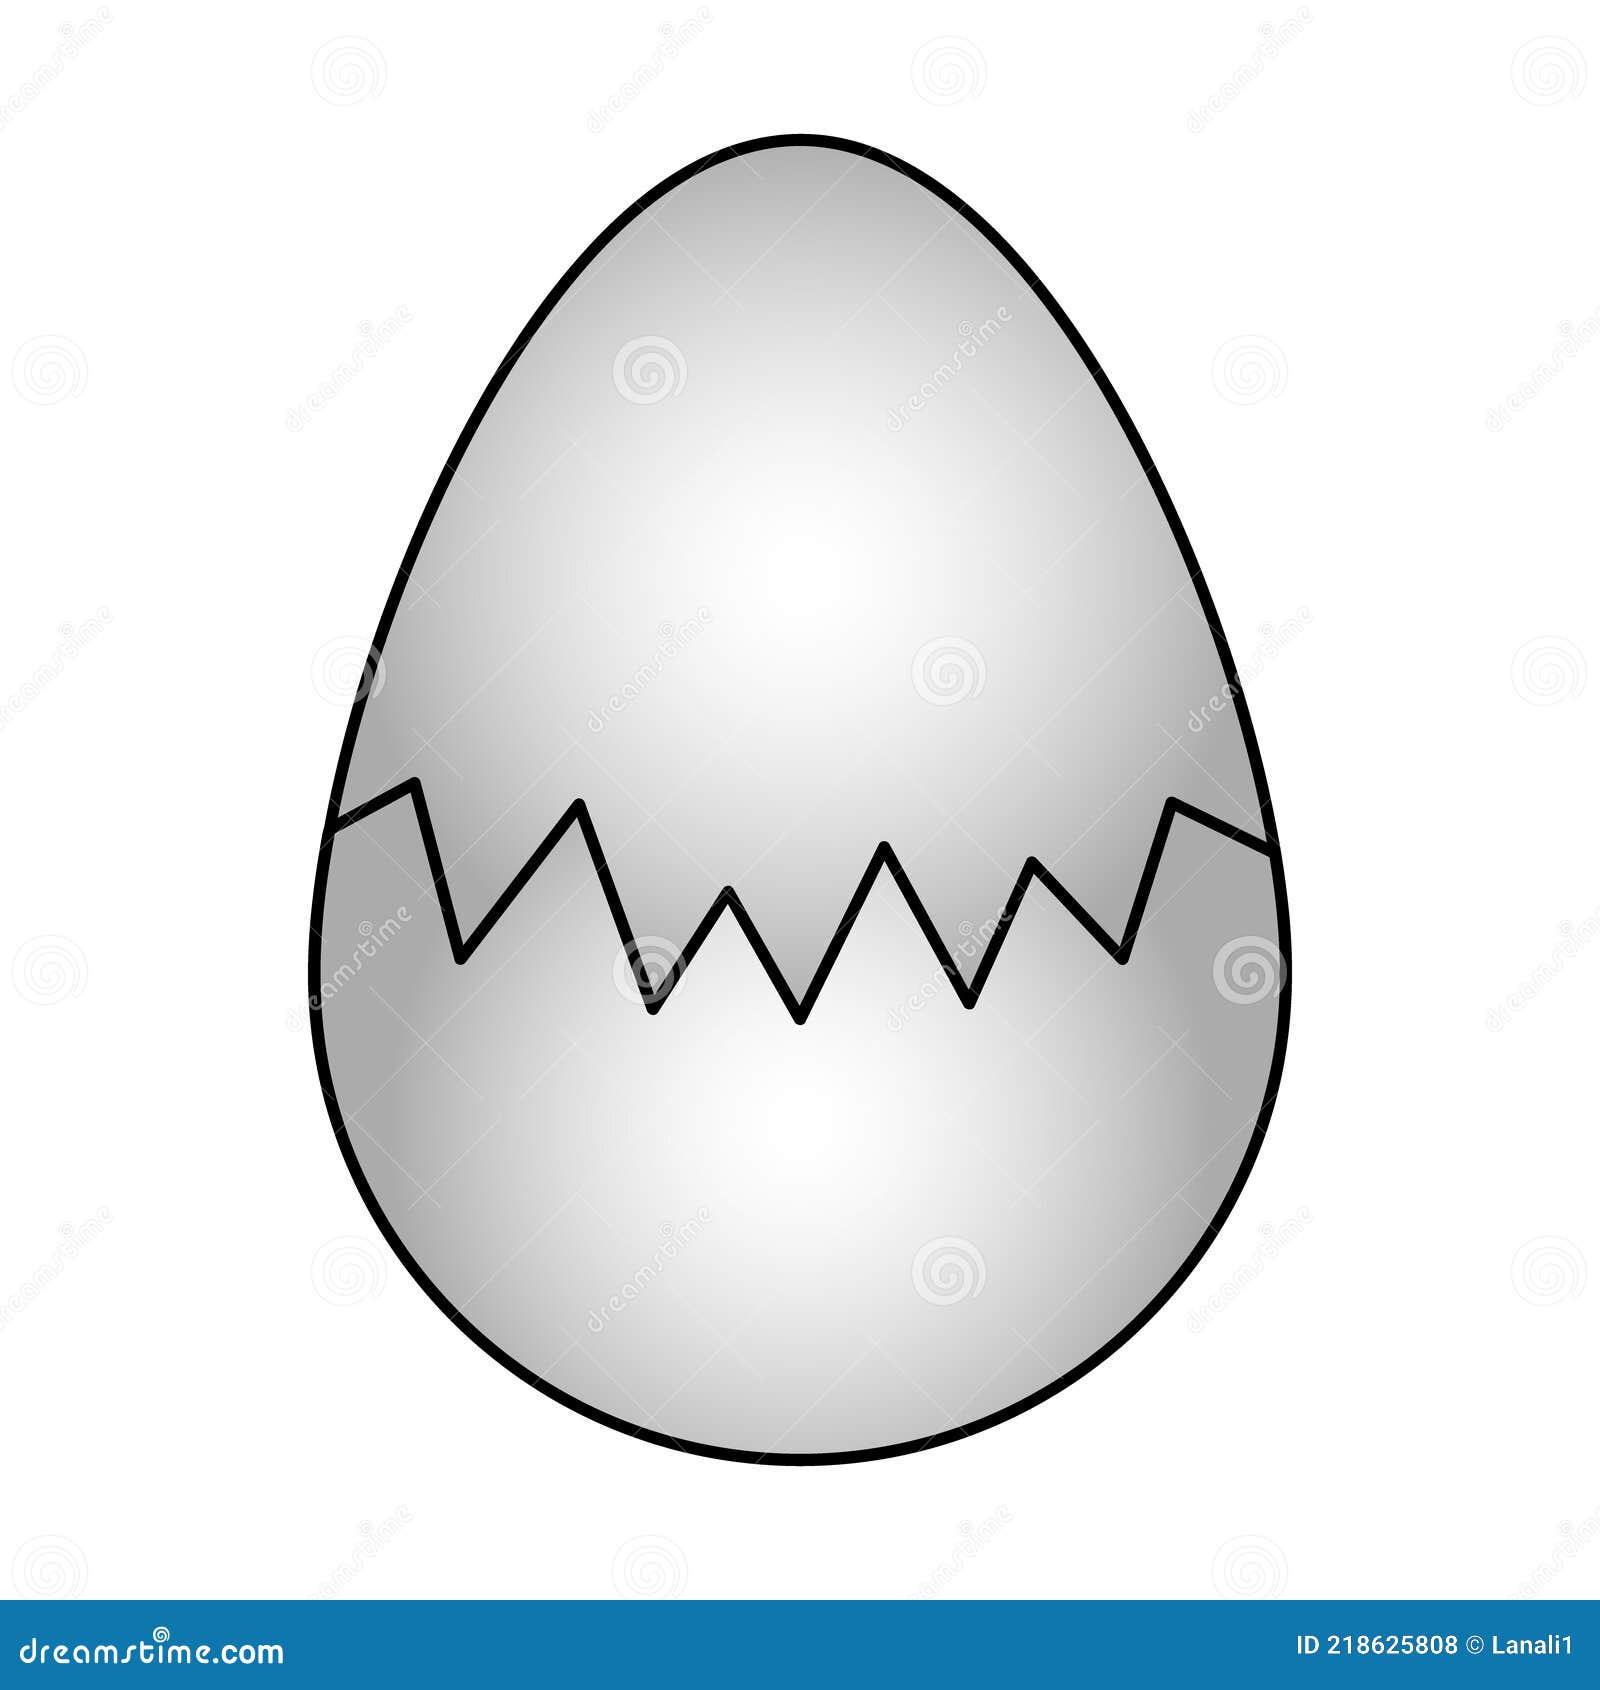 A menacing egg - Drawception